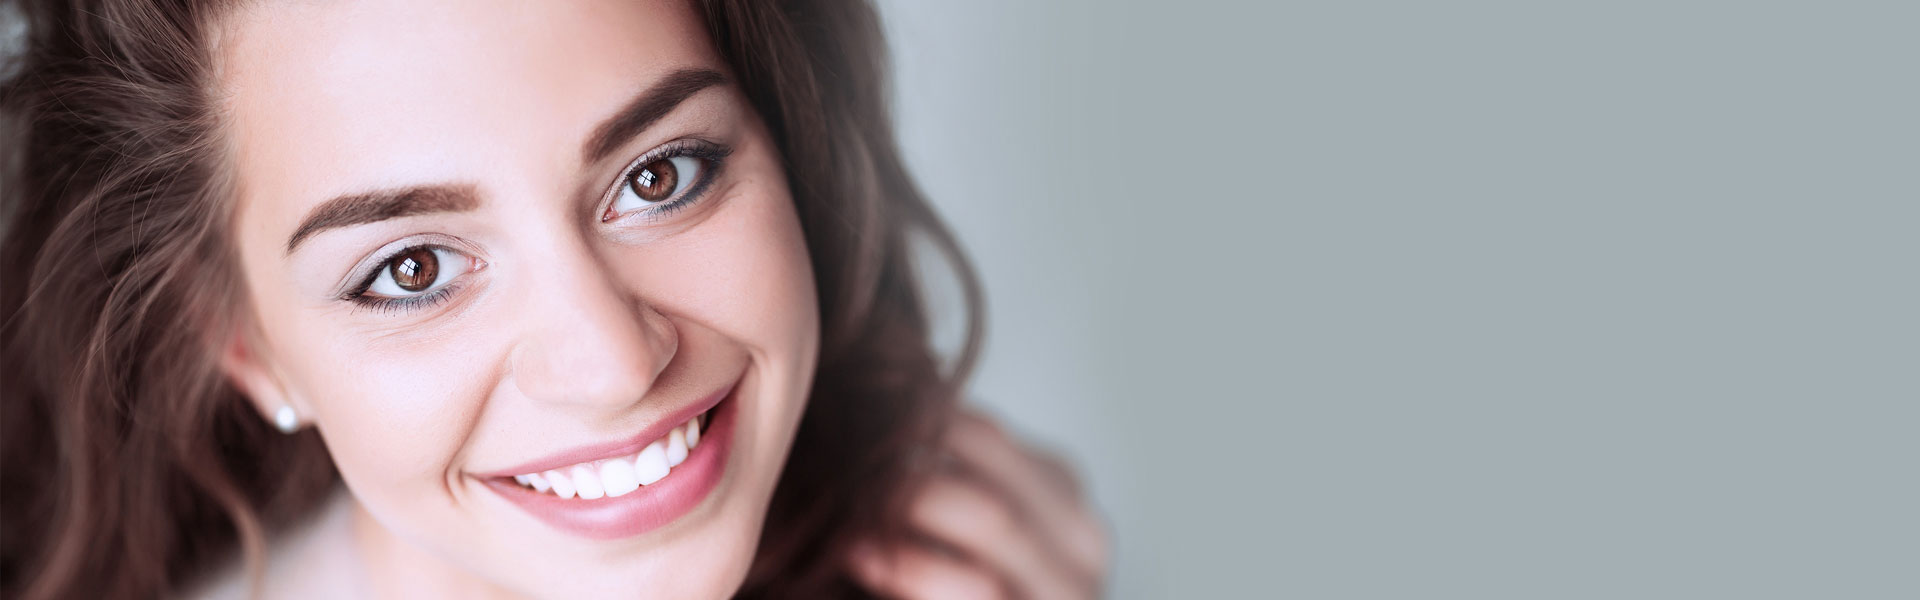 Dermal Fillers Can Complete Your Smile Makeover